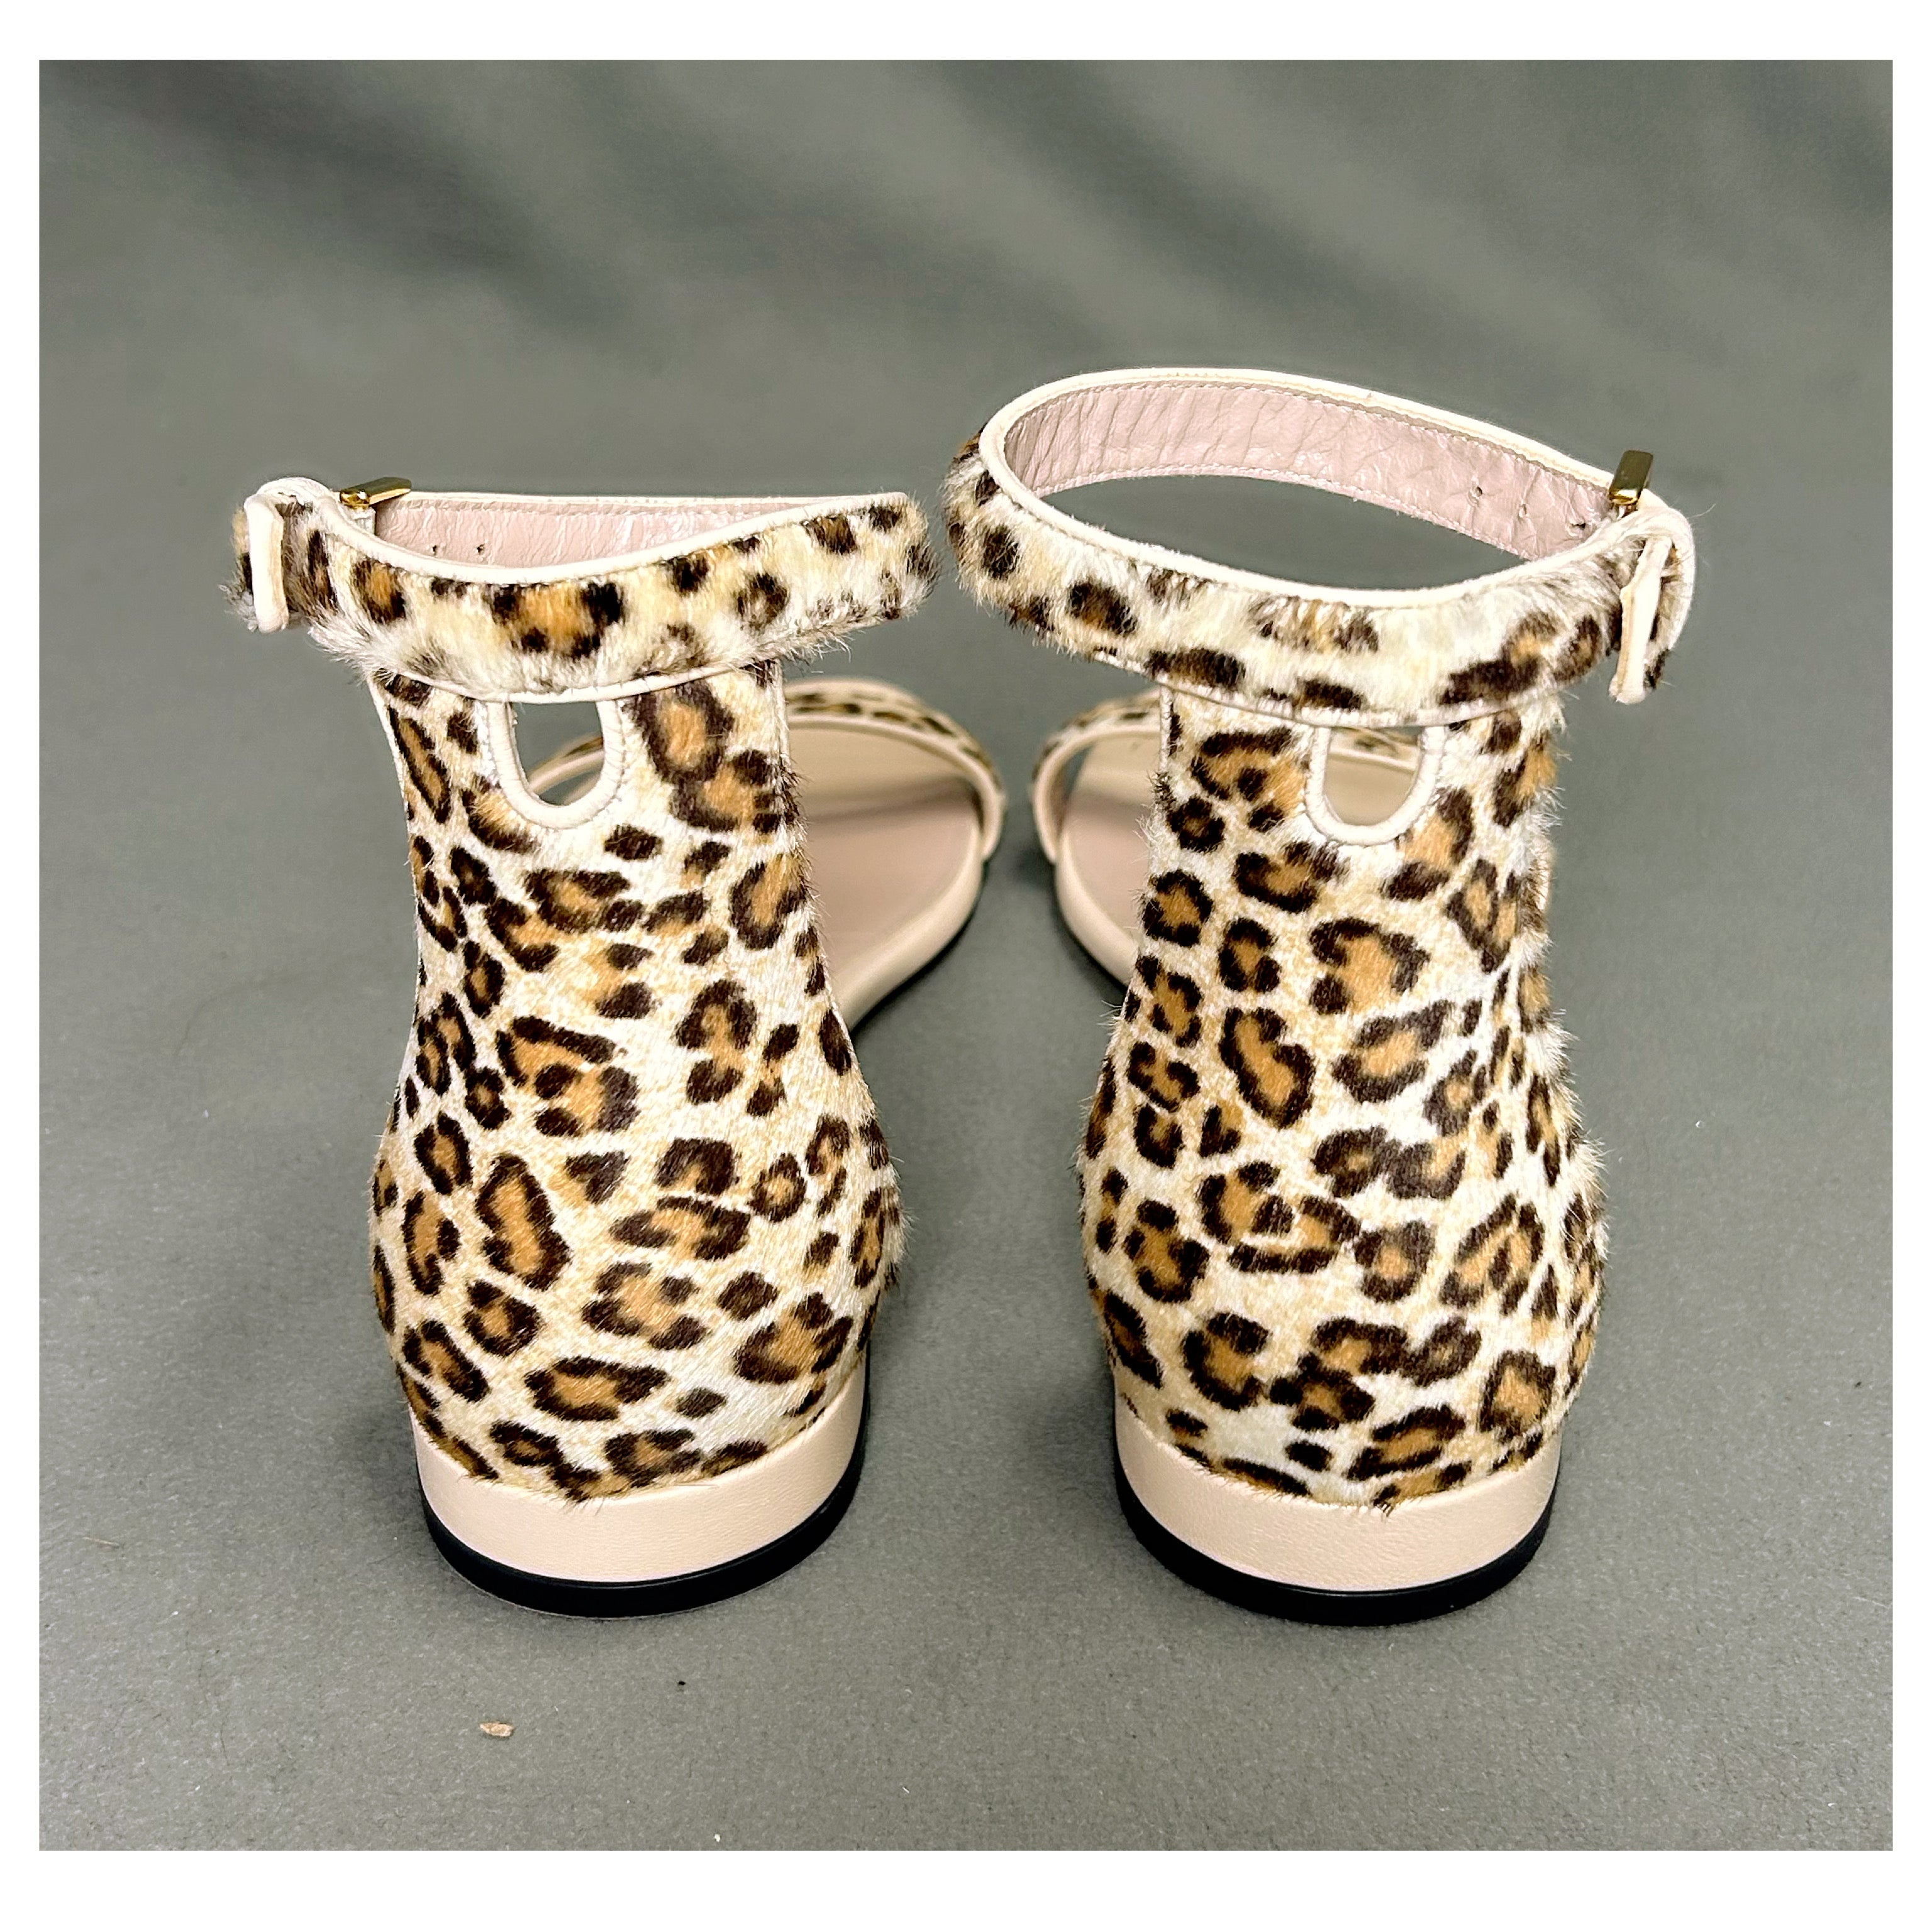 Stuart Weitzman leopard sandals, size 9